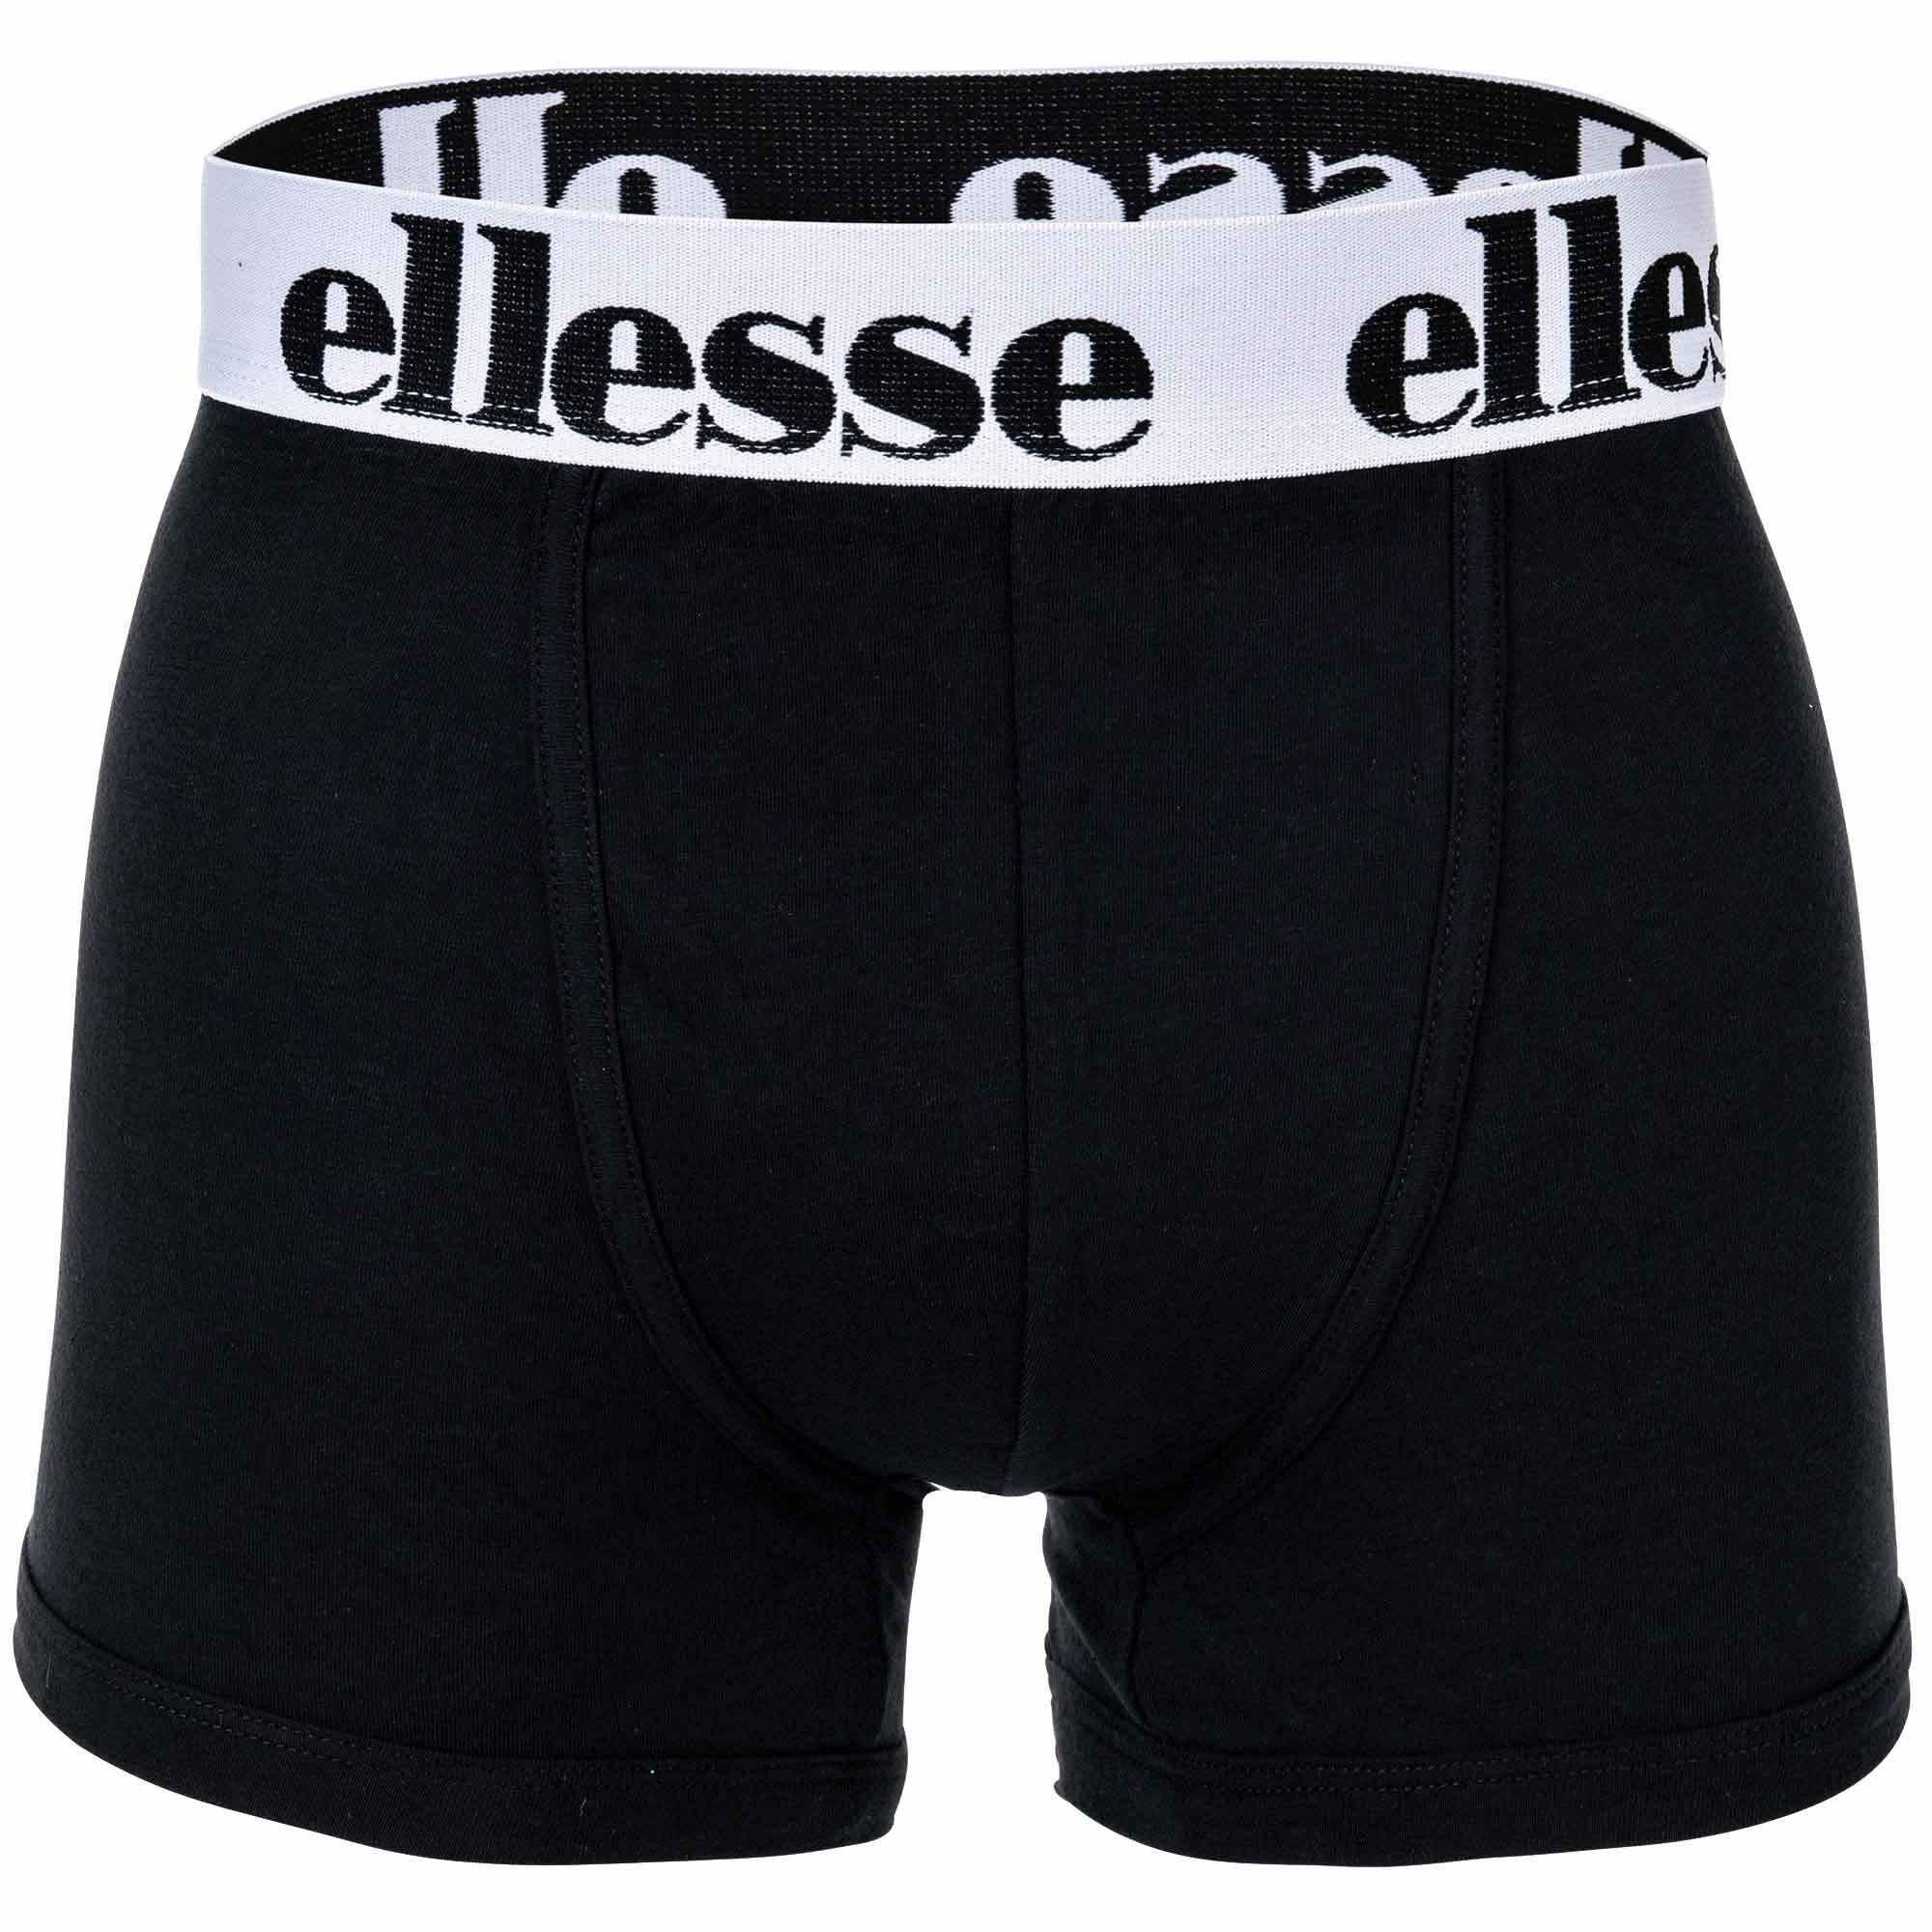 Yema Ellesse Schwarz/Blau/Rot/Grau Pack Boxer Shorts, Pack Boxer Herren 7 7er - Boxer